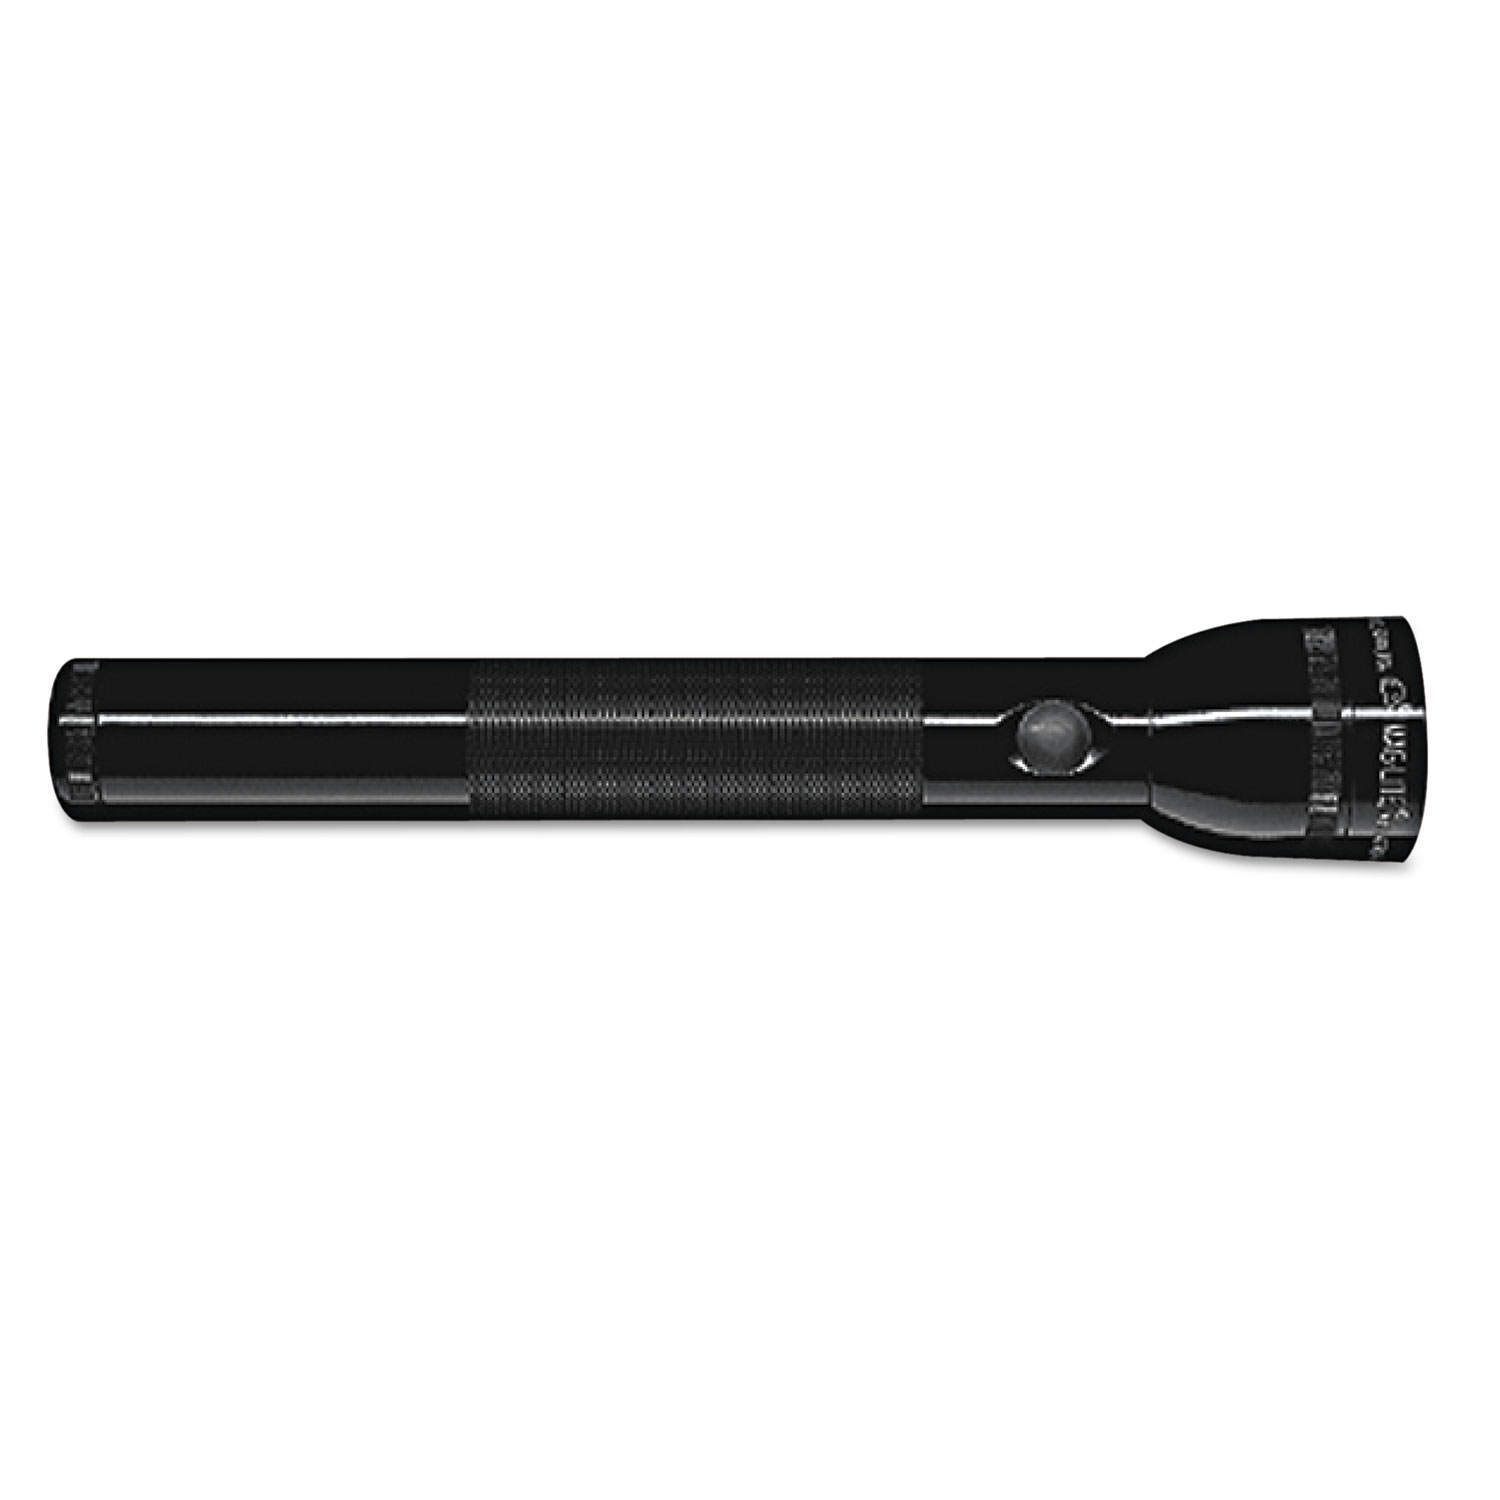  Maglite S3D016 Standard Flashlight, 3 D Batteries (Sold Separately), Black (MGLS3D016) 